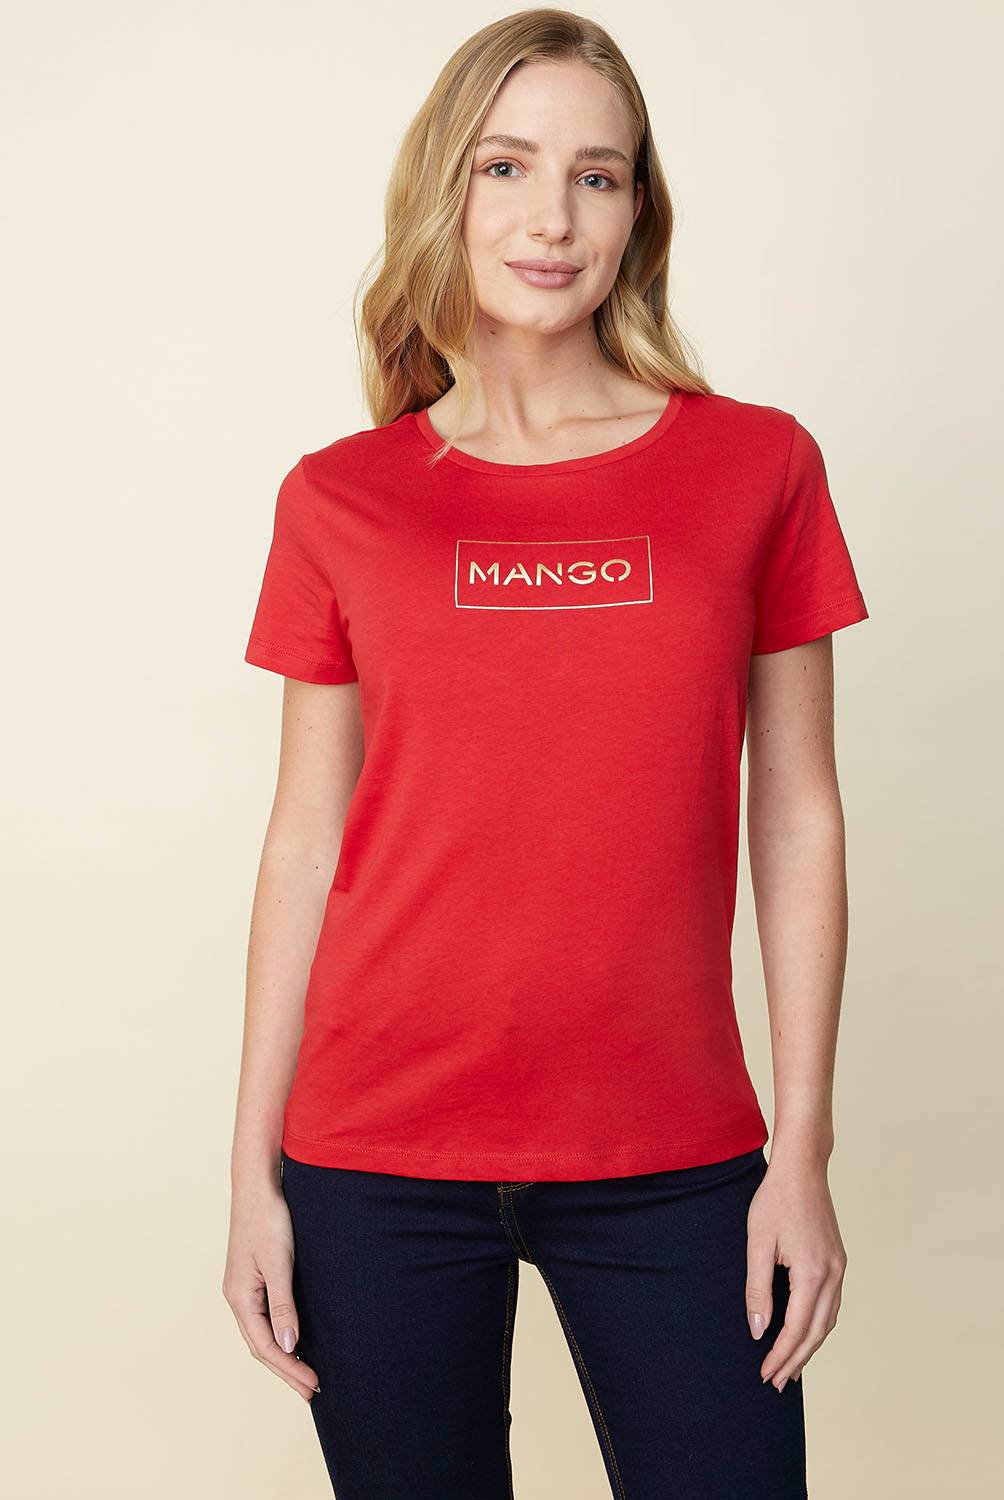 MANGO - Mango Polera Logo Metalizado Mangolog-H Mujer